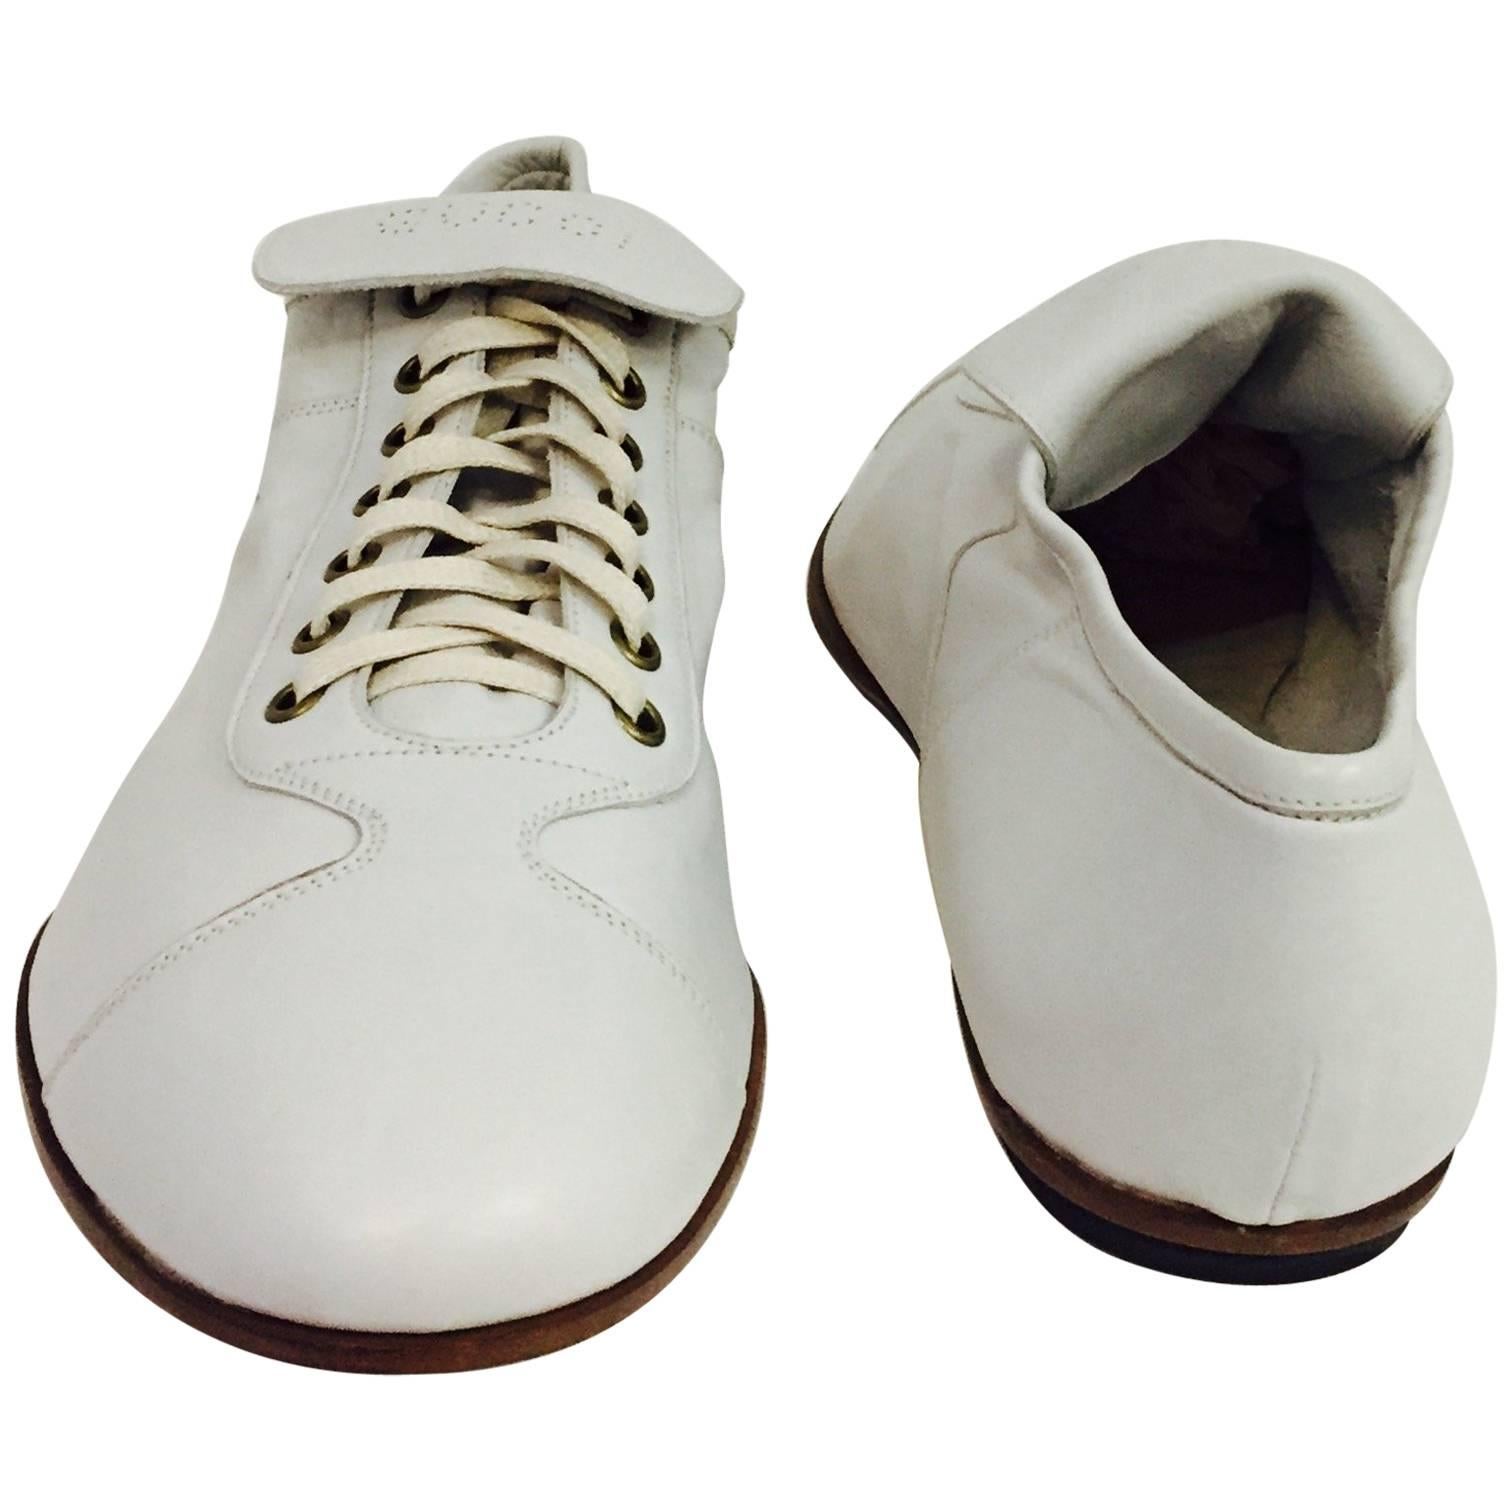 Men's Gucci Vintage Soft Leather sneaker Style Shoe in White, Italian Size 43 E